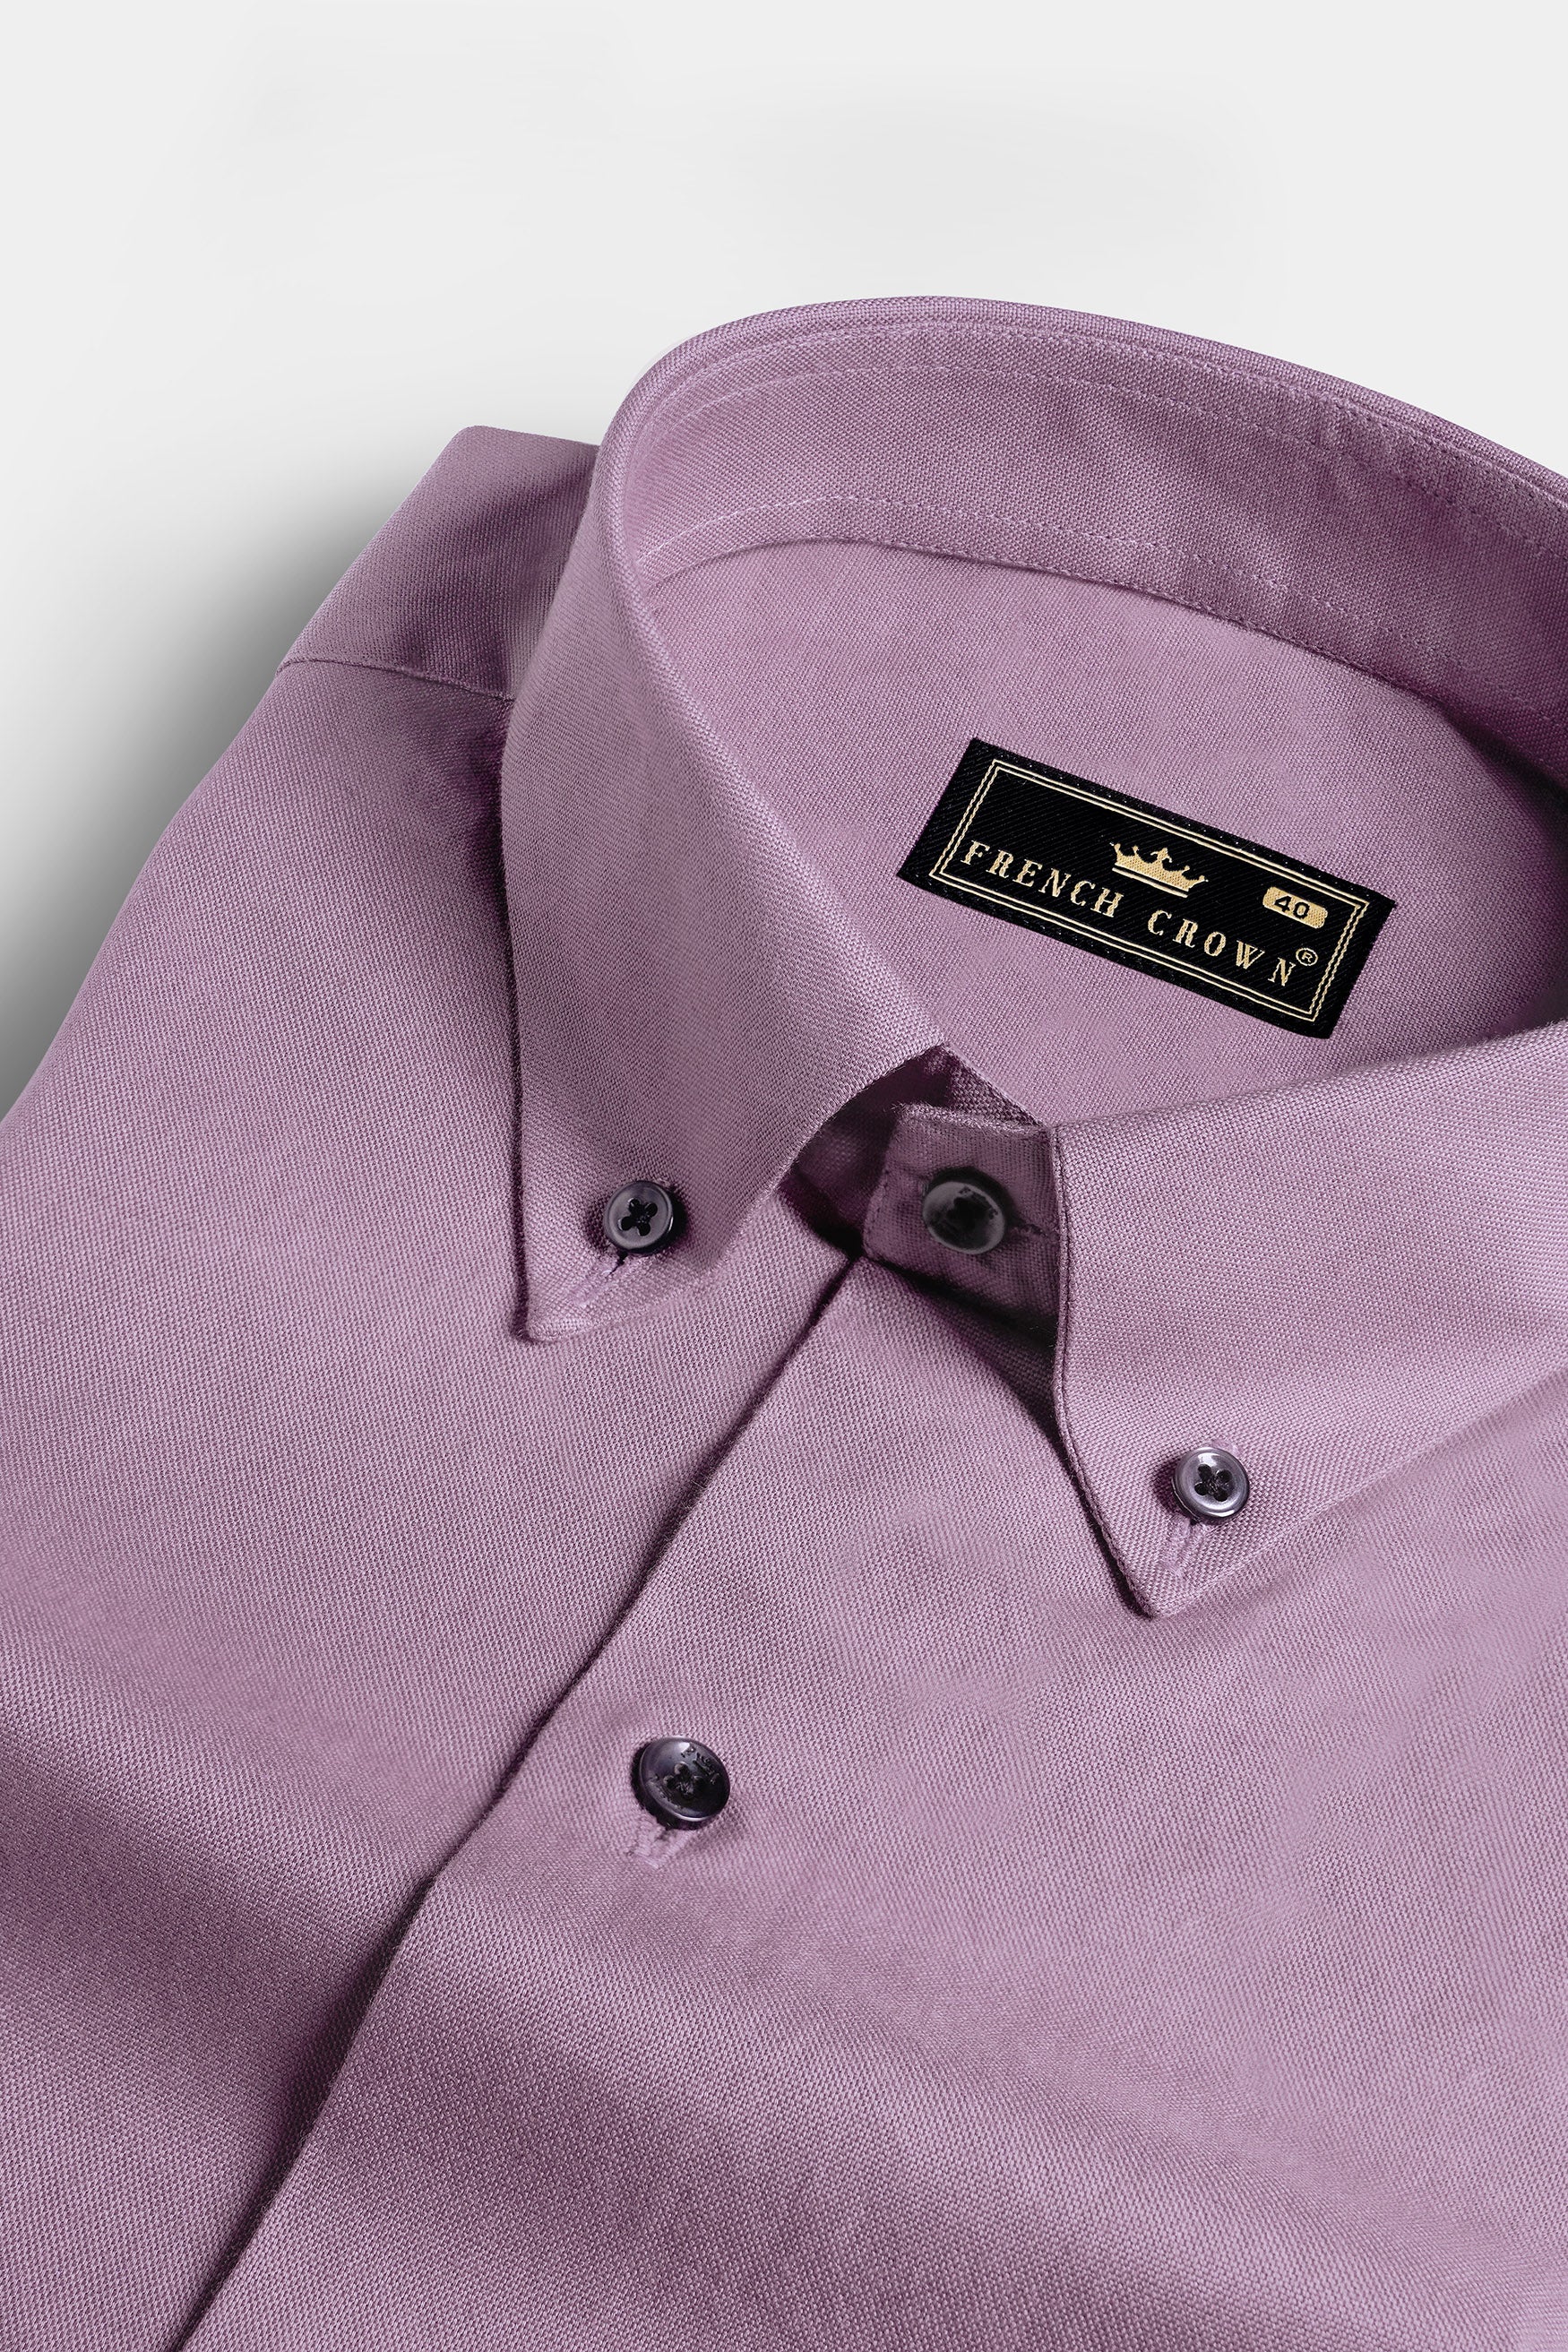 Mobster Purple Royal Oxford Button Down Shirt